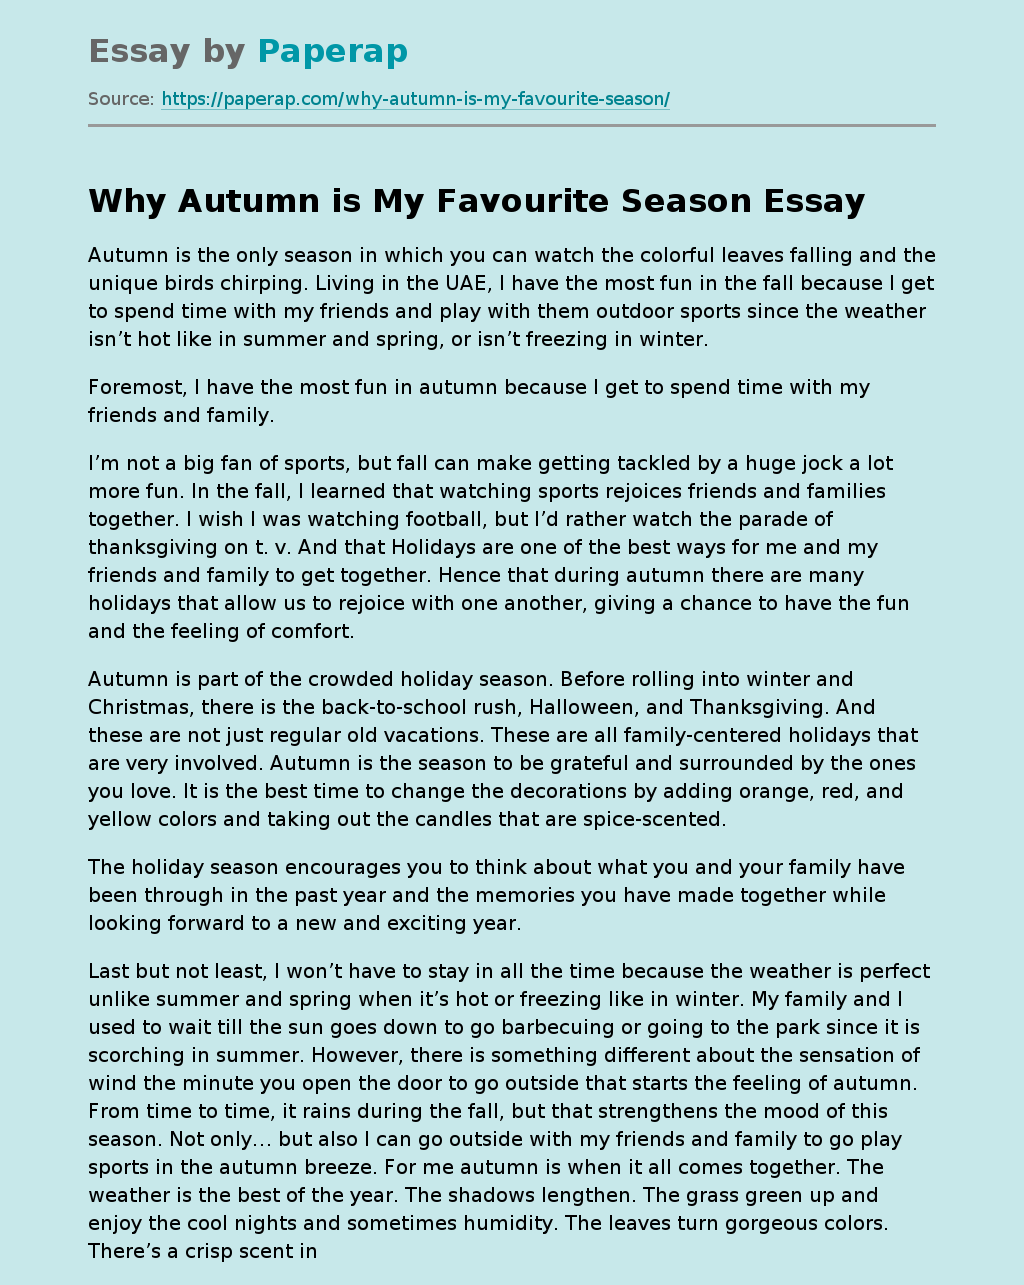 Why Autumn is My Favourite Season